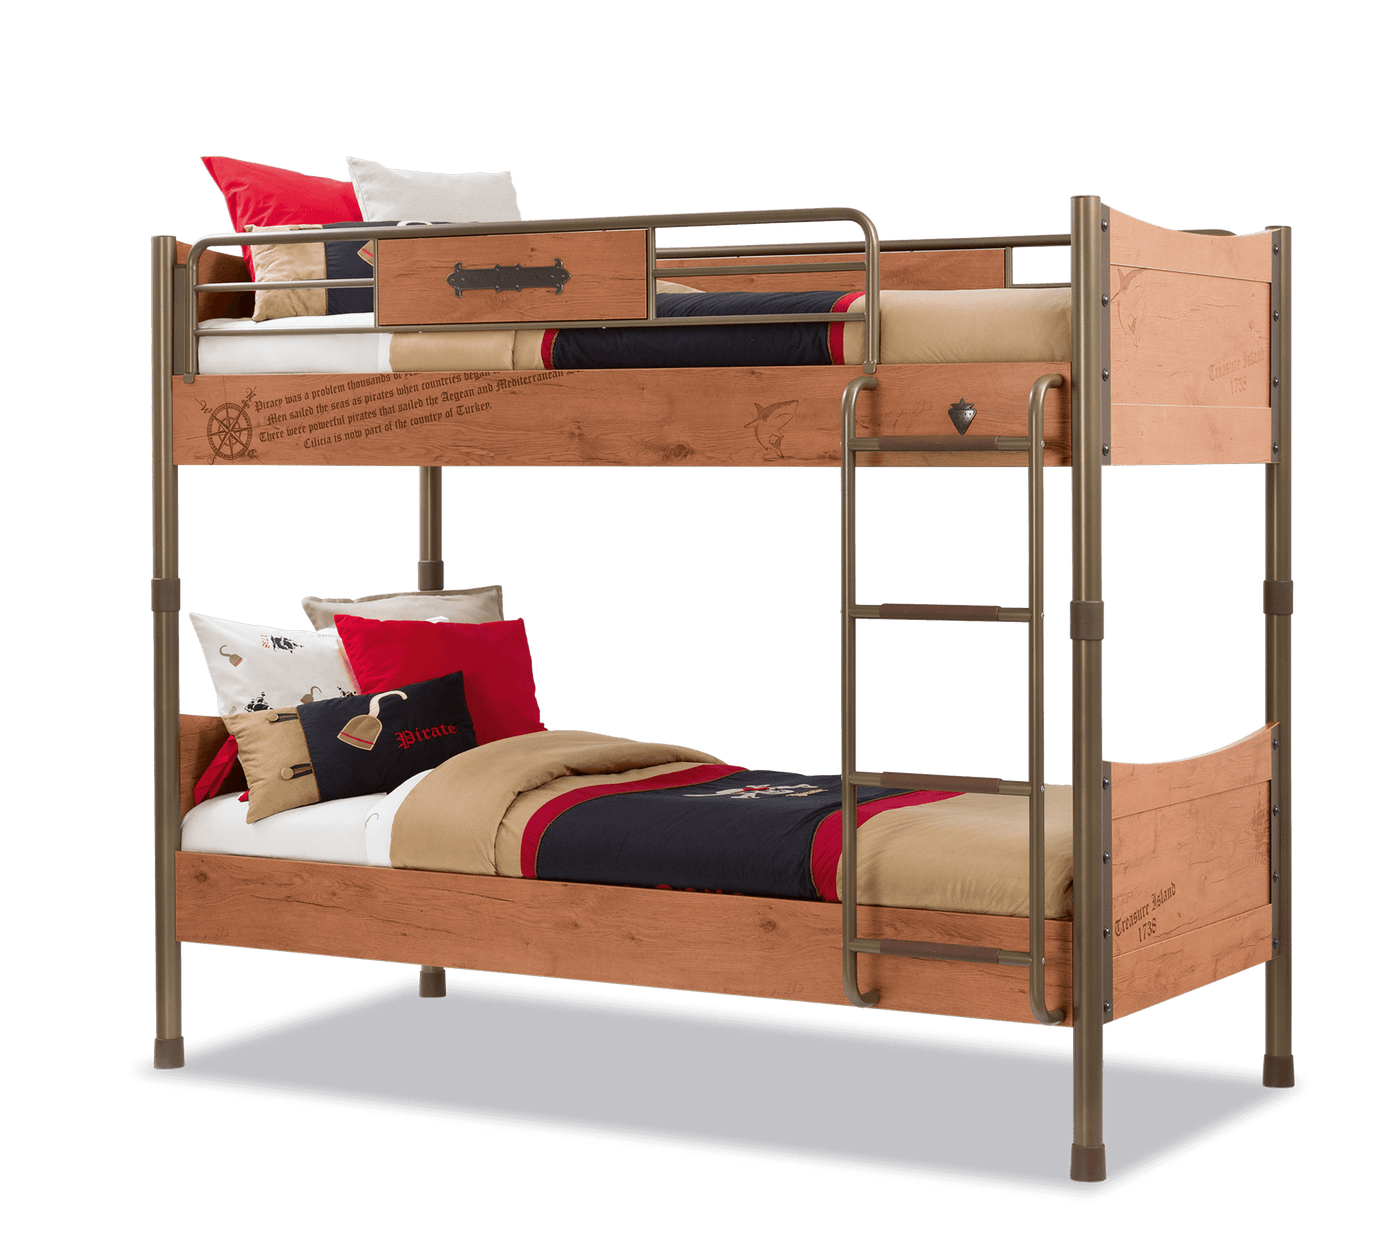 Pirate Bunk Bed [90x200 Cm]